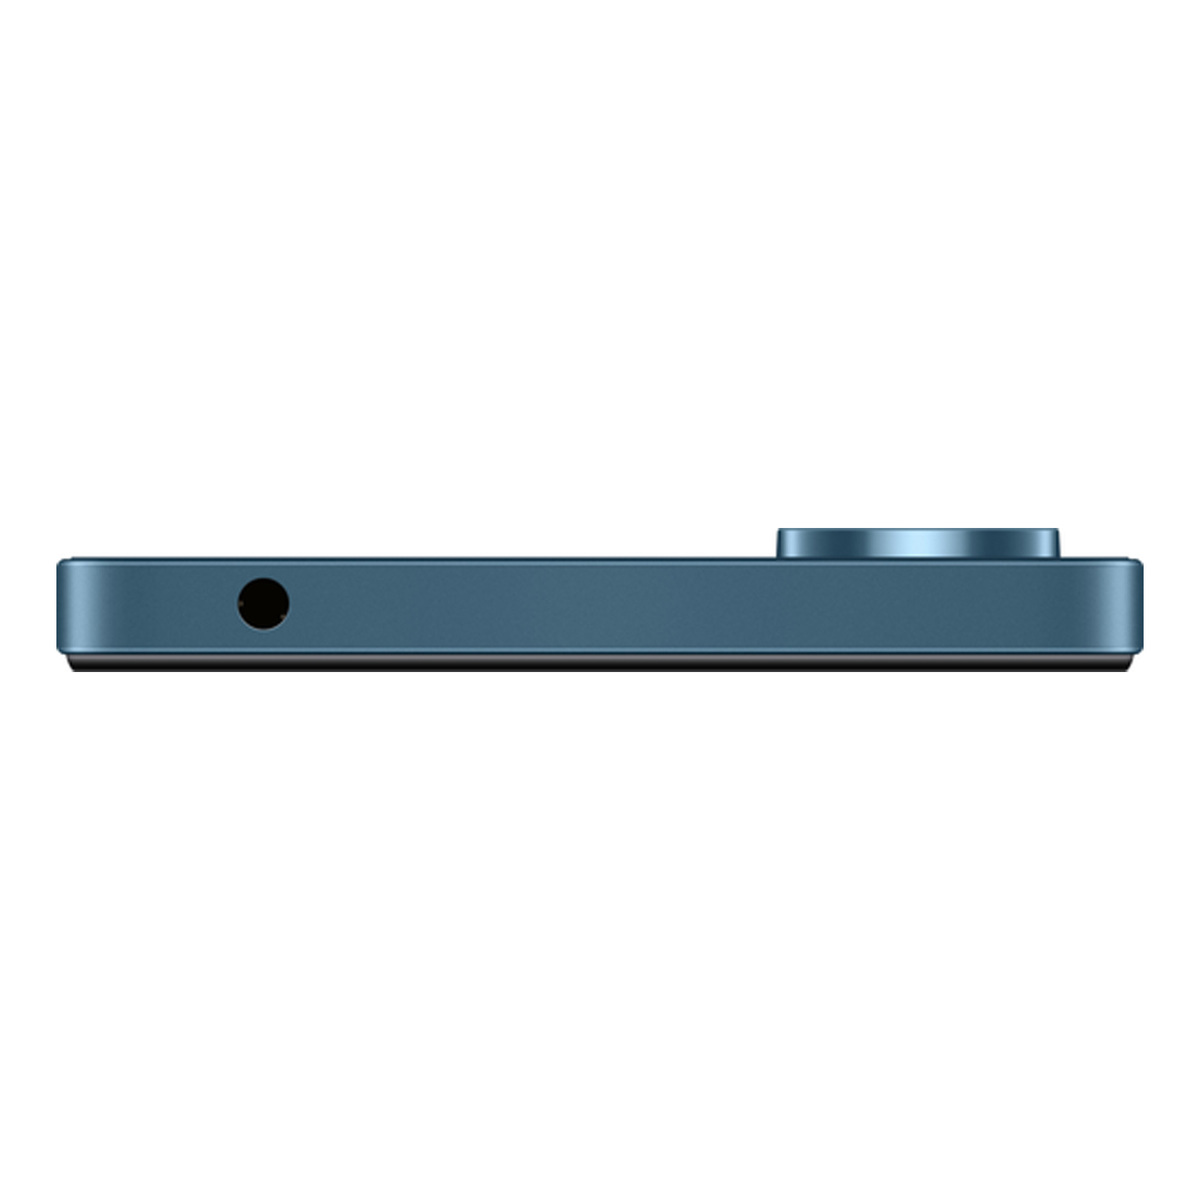 شاومي 13C هاتف ذكي ثنائي الشريحة، 4G، ذاكرة وصول عشوائي 4 جيجابايت، تخزين 128 جيجابايت، أزرق داكن